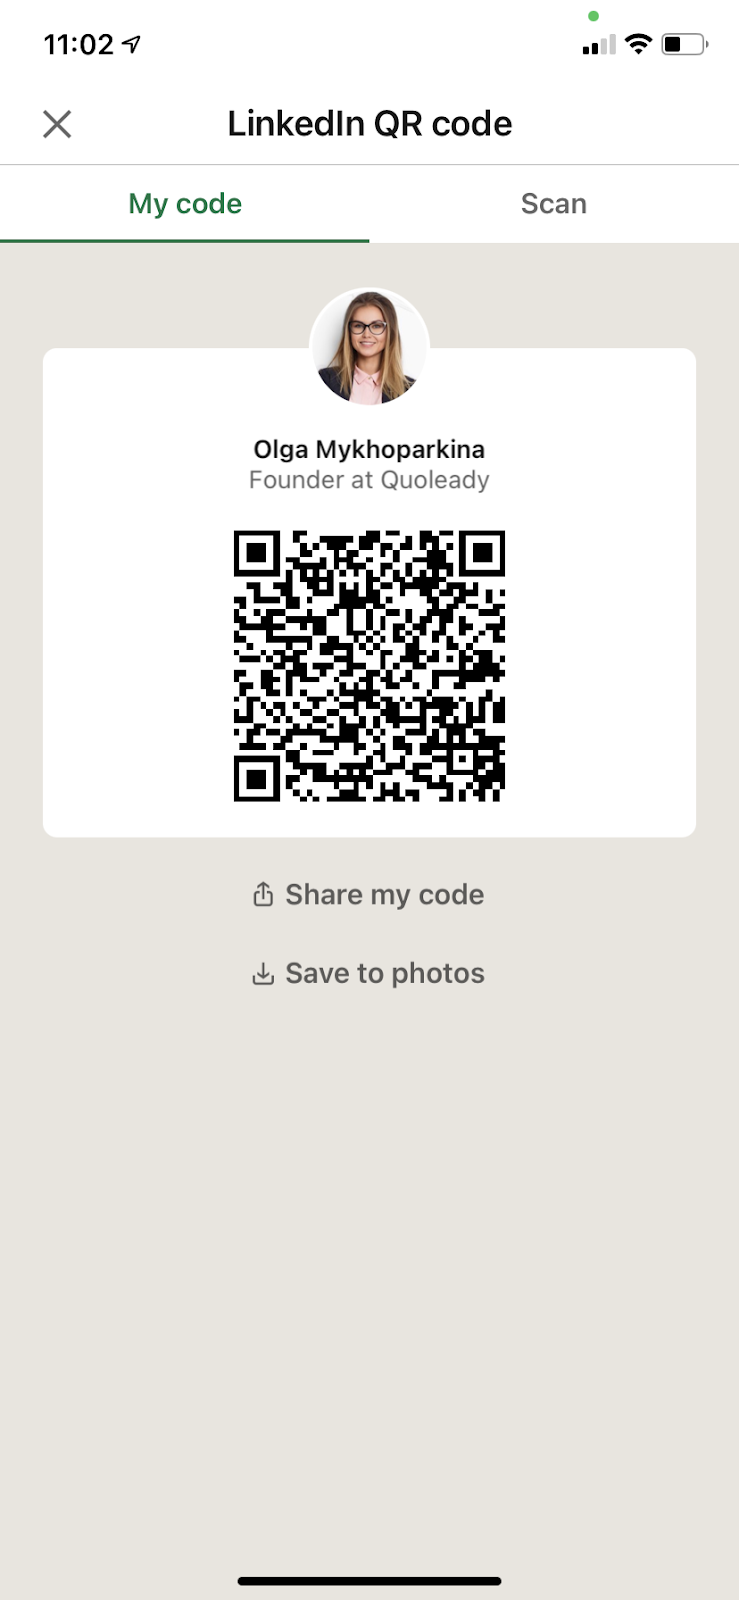 Olga Mykhoparkina's, a founder of Quoleady, LinkedIn QR code